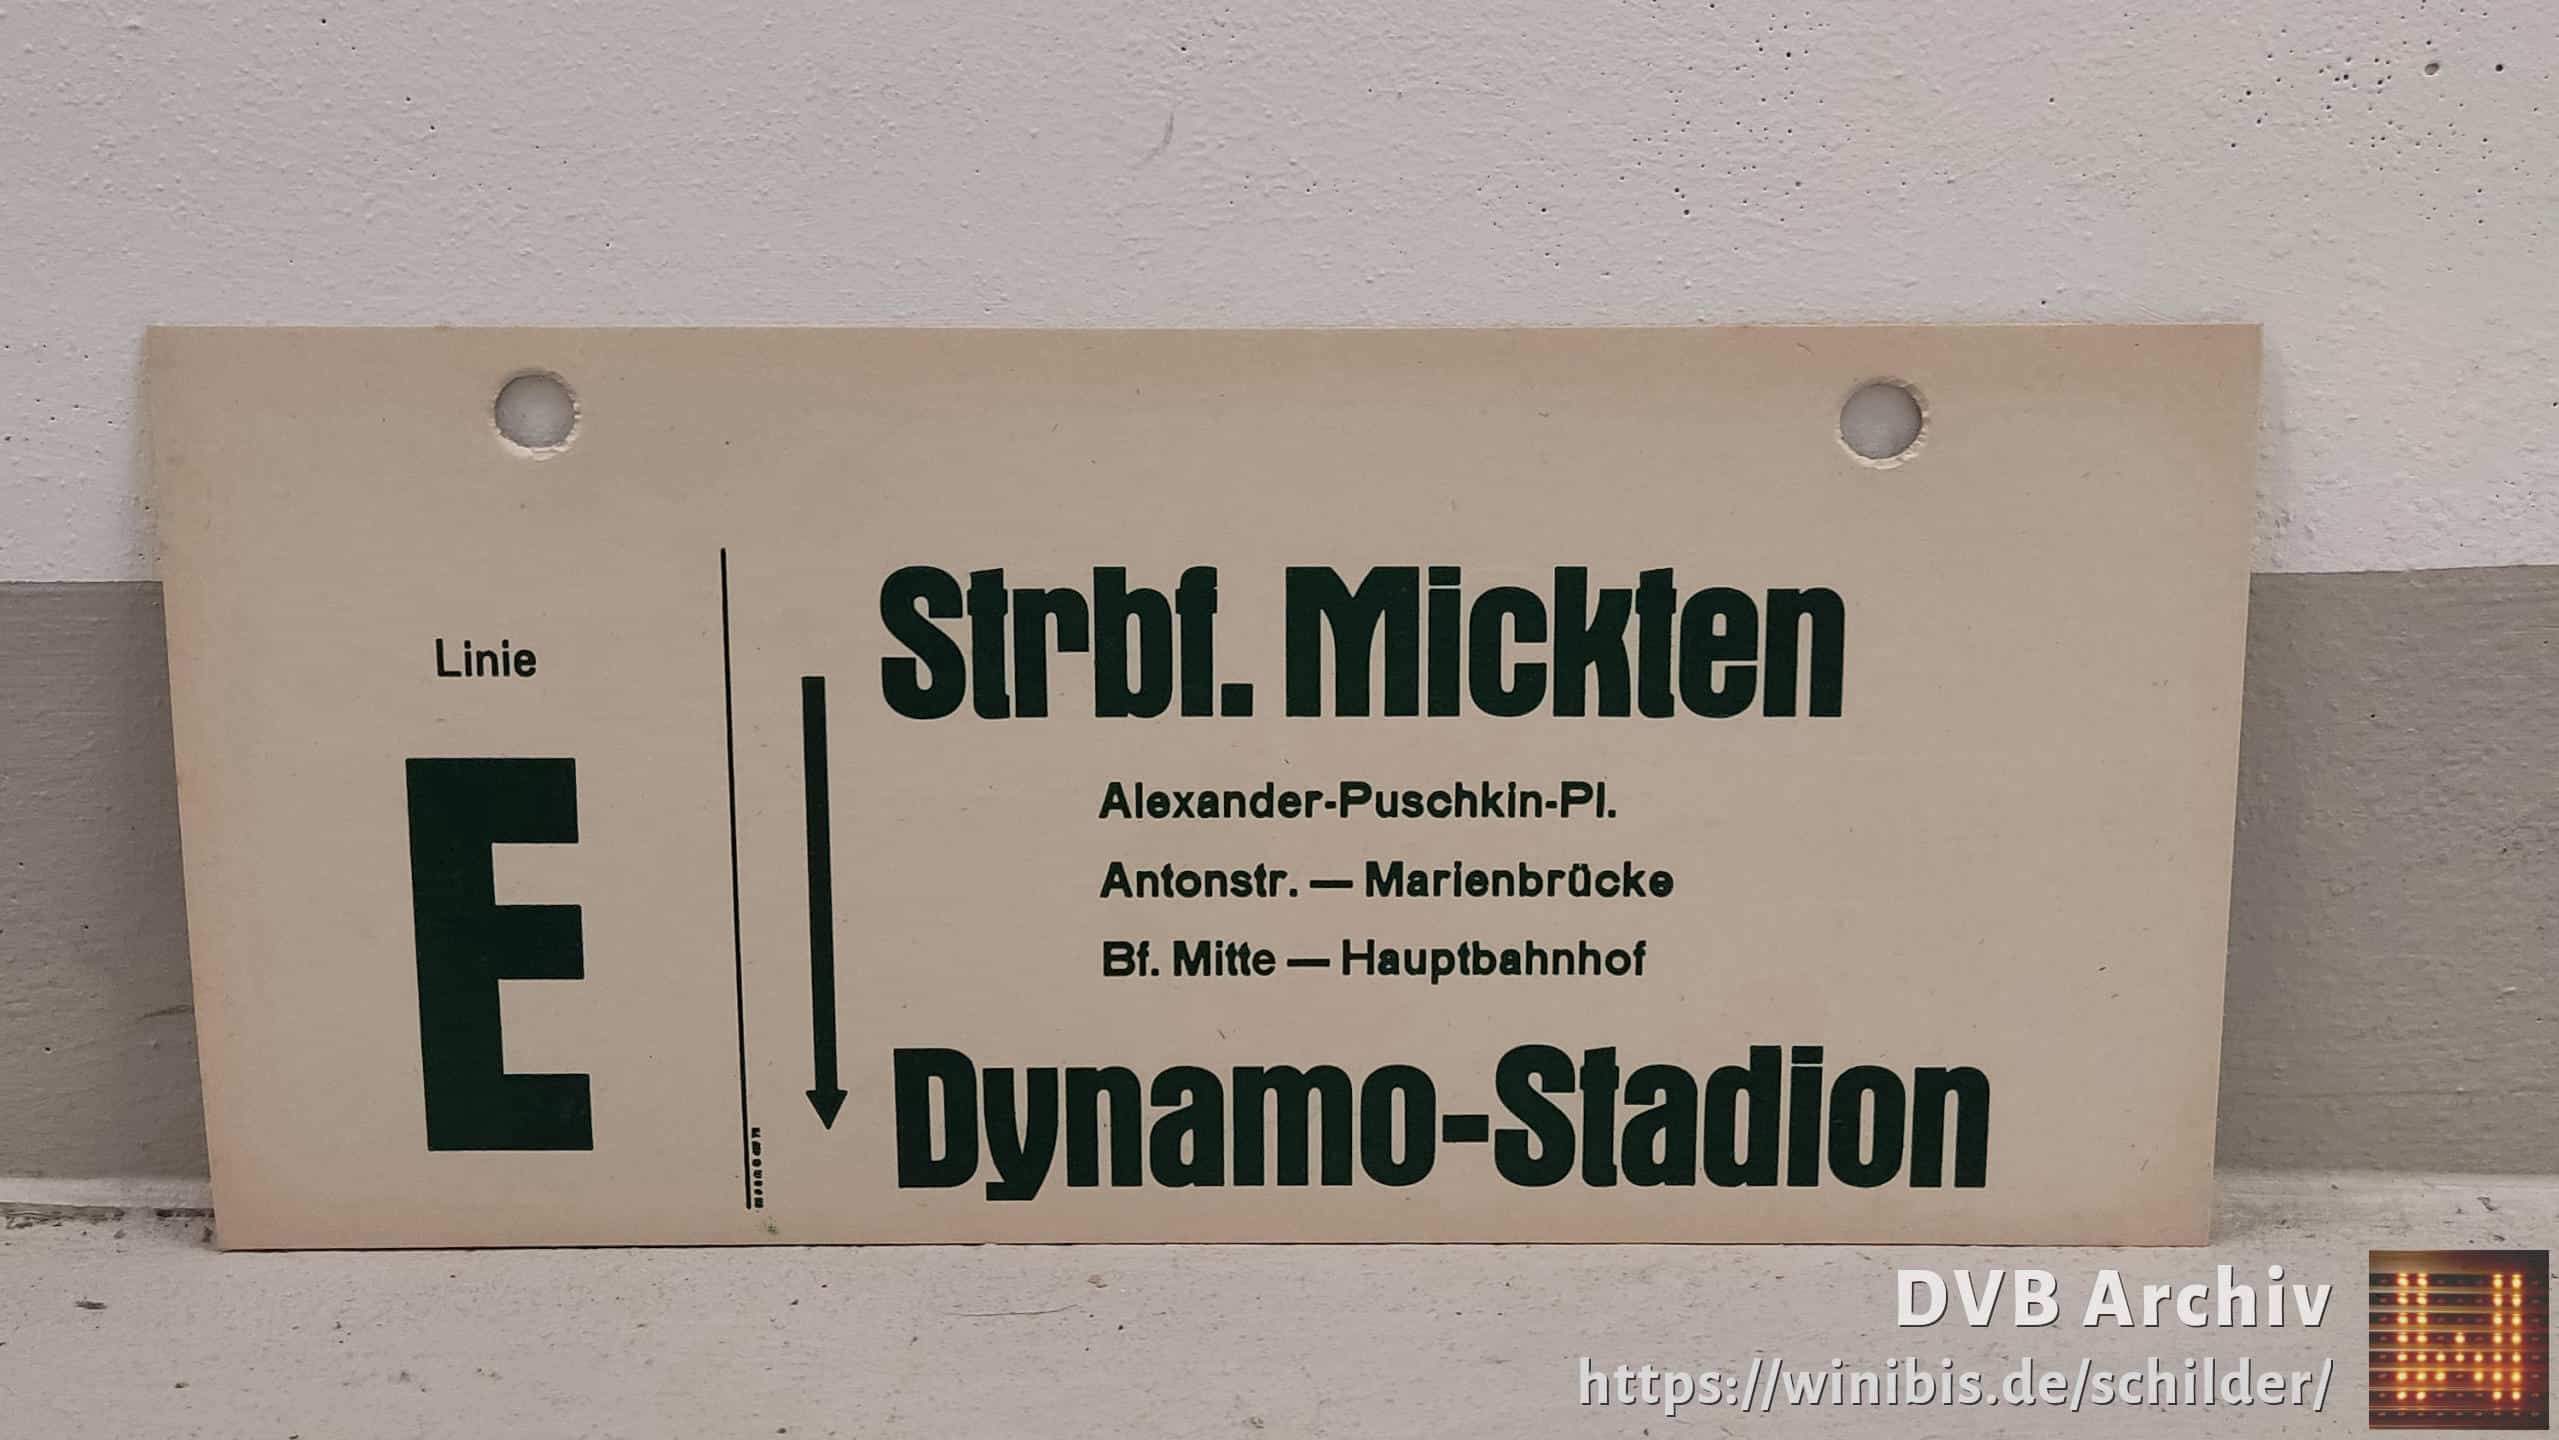 Linie E Strbf. Mickten – Dynamo-Stadion